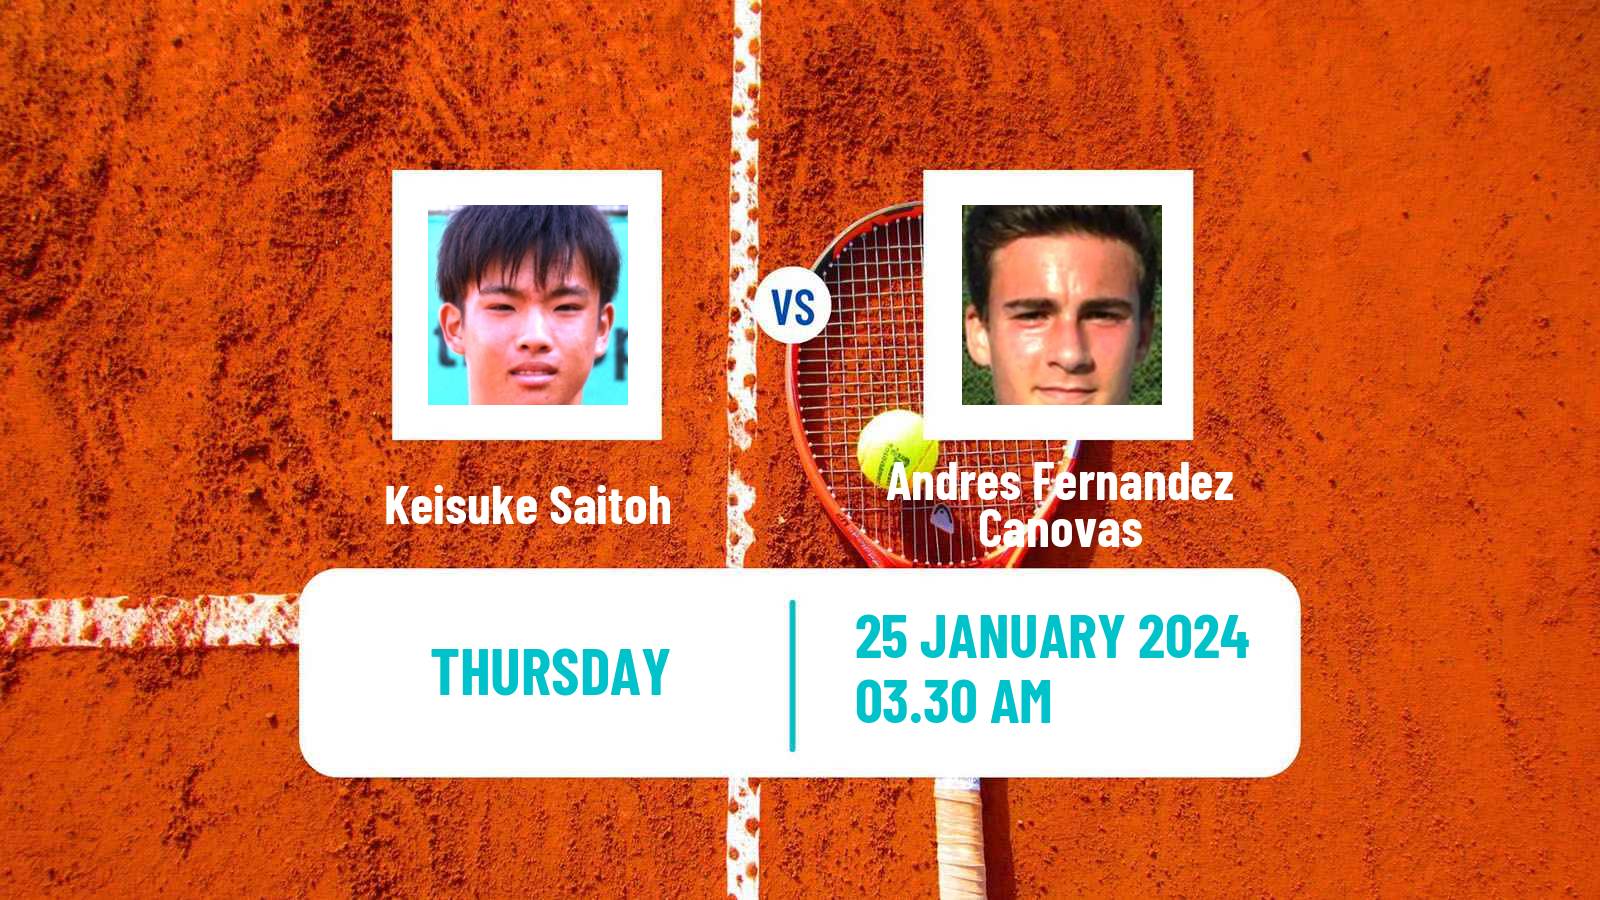 Tennis ITF M15 Monastir 4 Men Keisuke Saitoh - Andres Fernandez Canovas